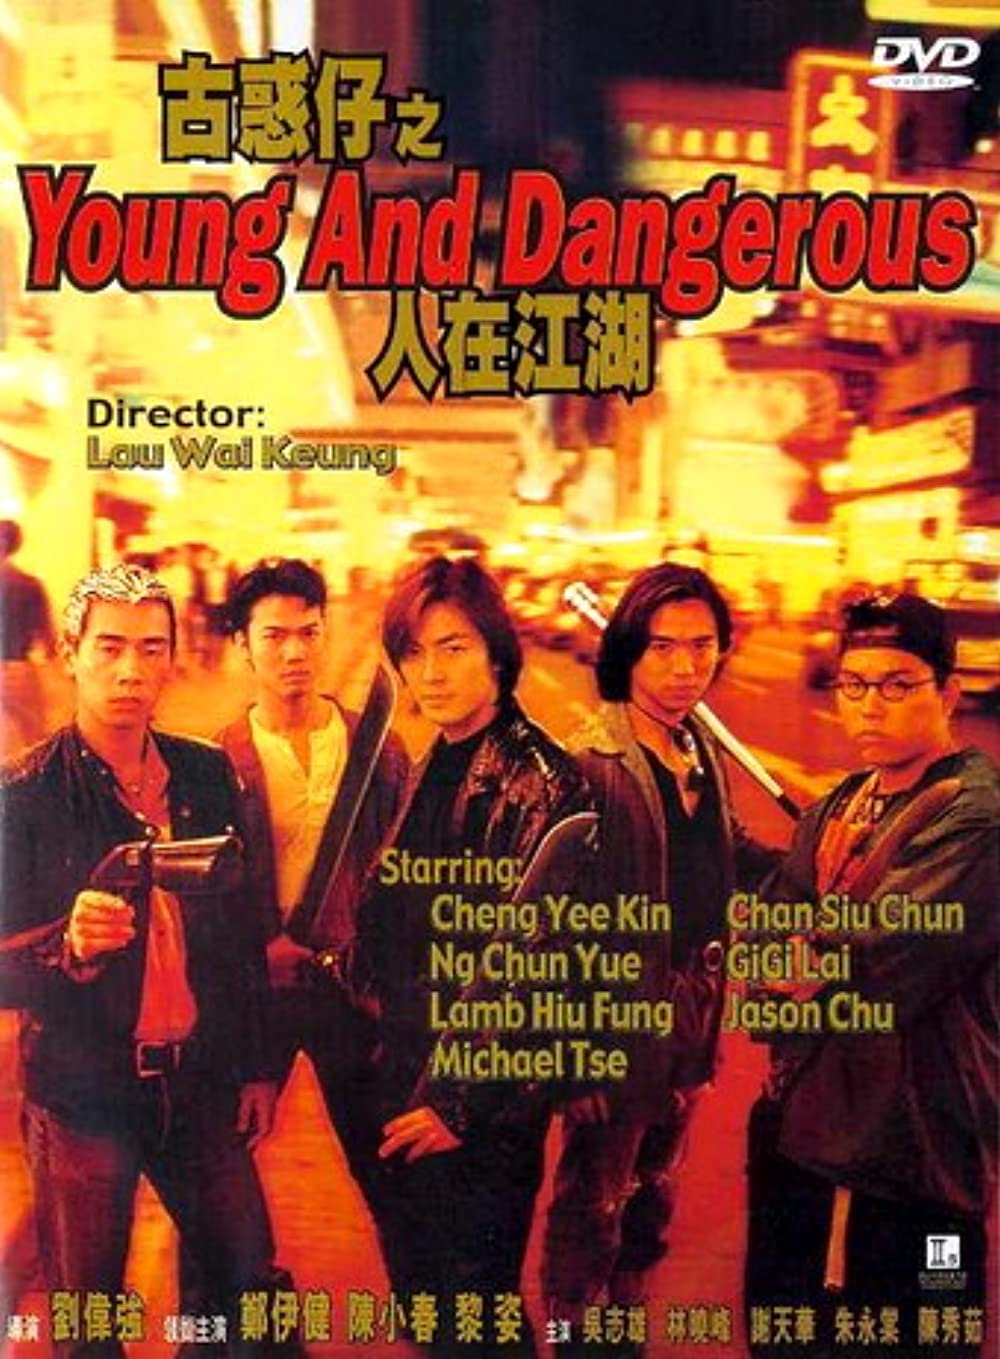 Poster phim Người Trong Giang Hồ 1: Ngũ Hổ Tái Xuất – Young And Dangerous 1 (1996) (Ảnh: Internet)